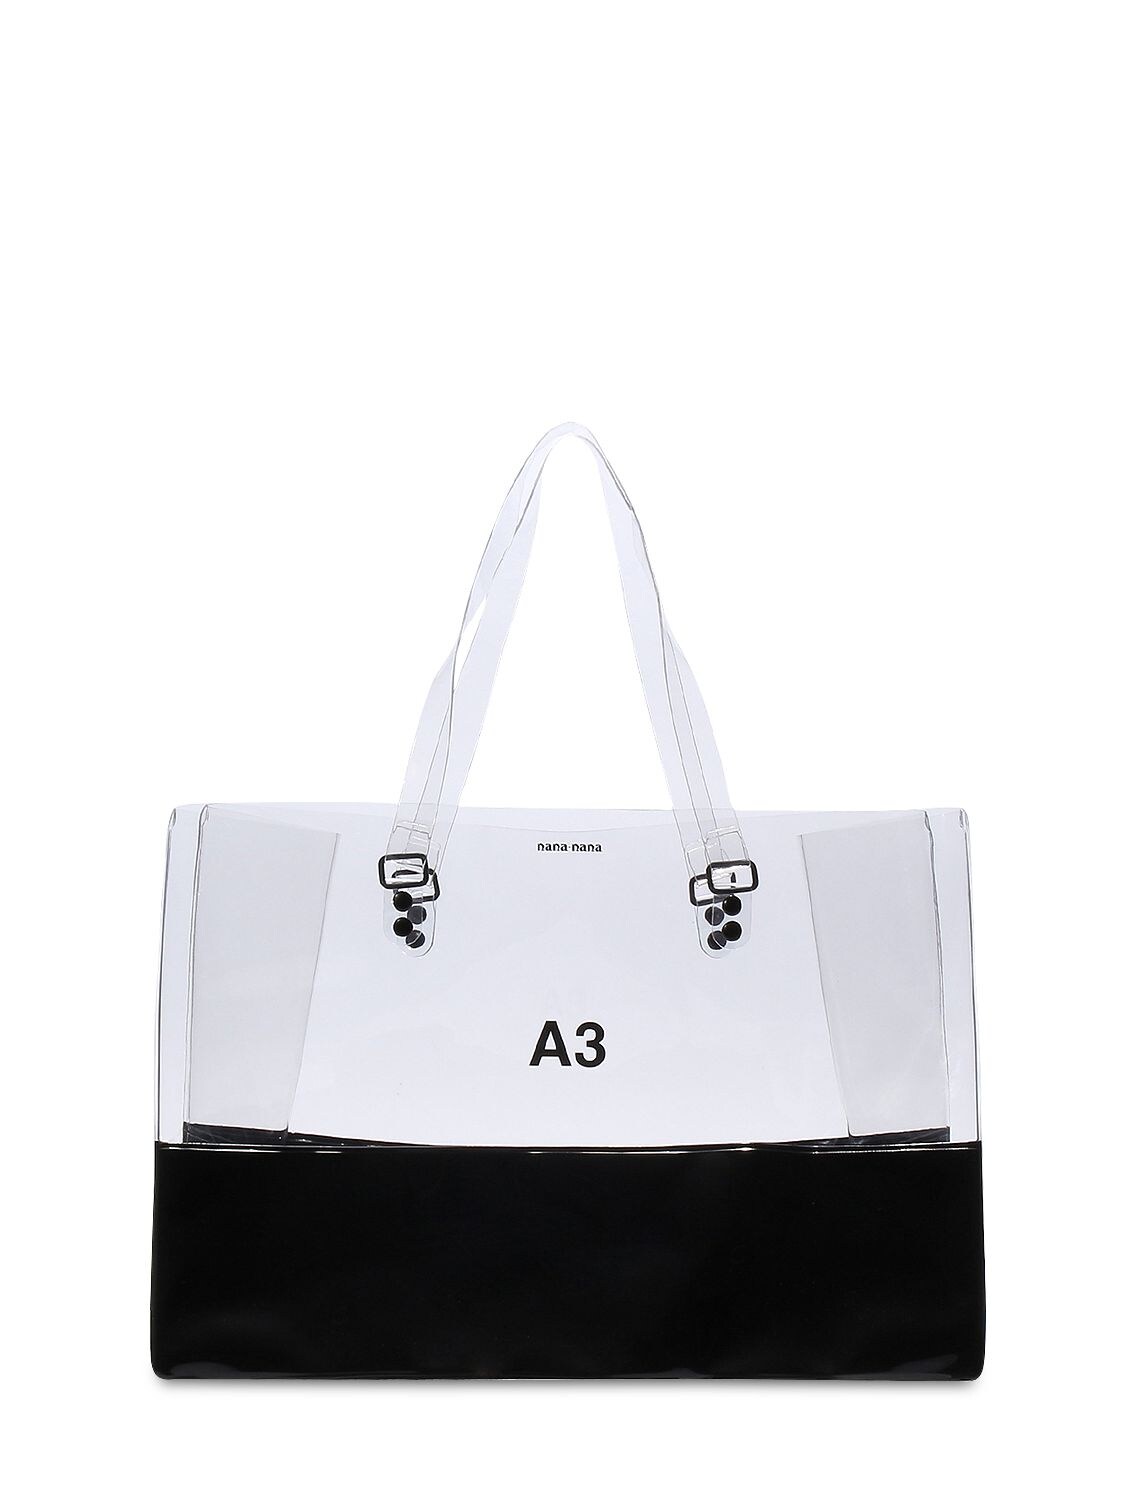 Nana-nana A3 Pvc Shopping Tote Bag In Transparent,black